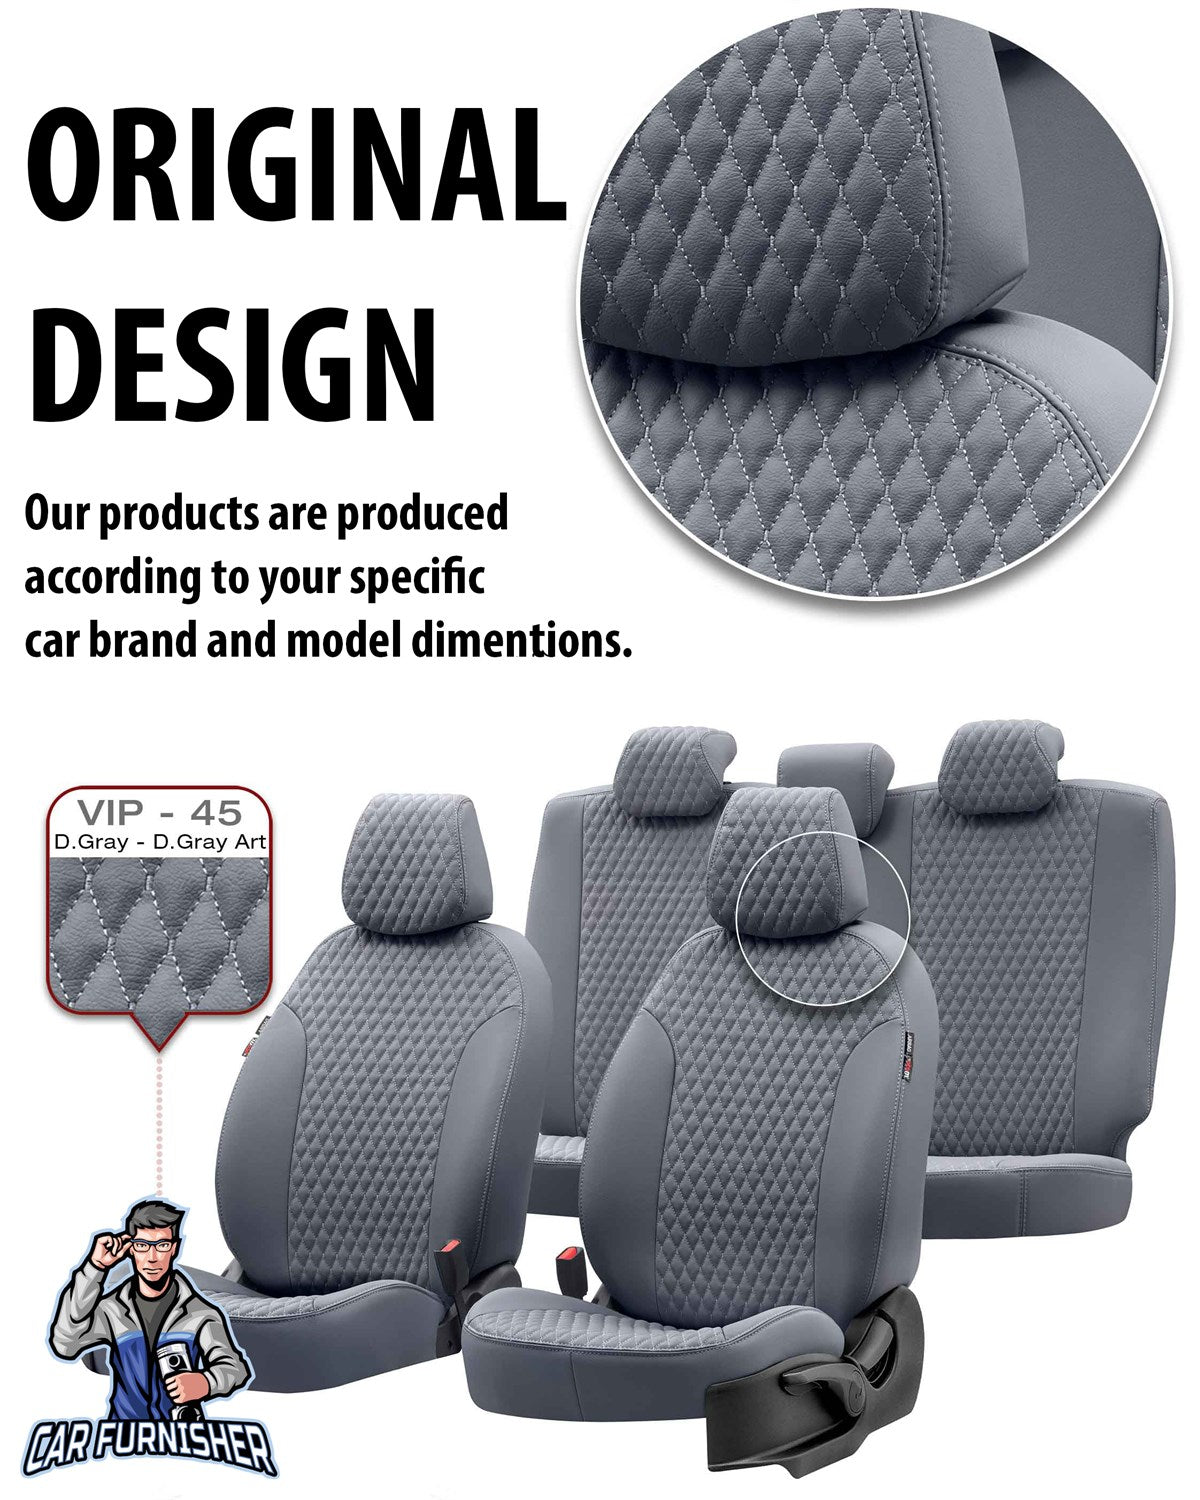 Honda City Seat Covers Amsterdam Leather Design Dark Gray Leather